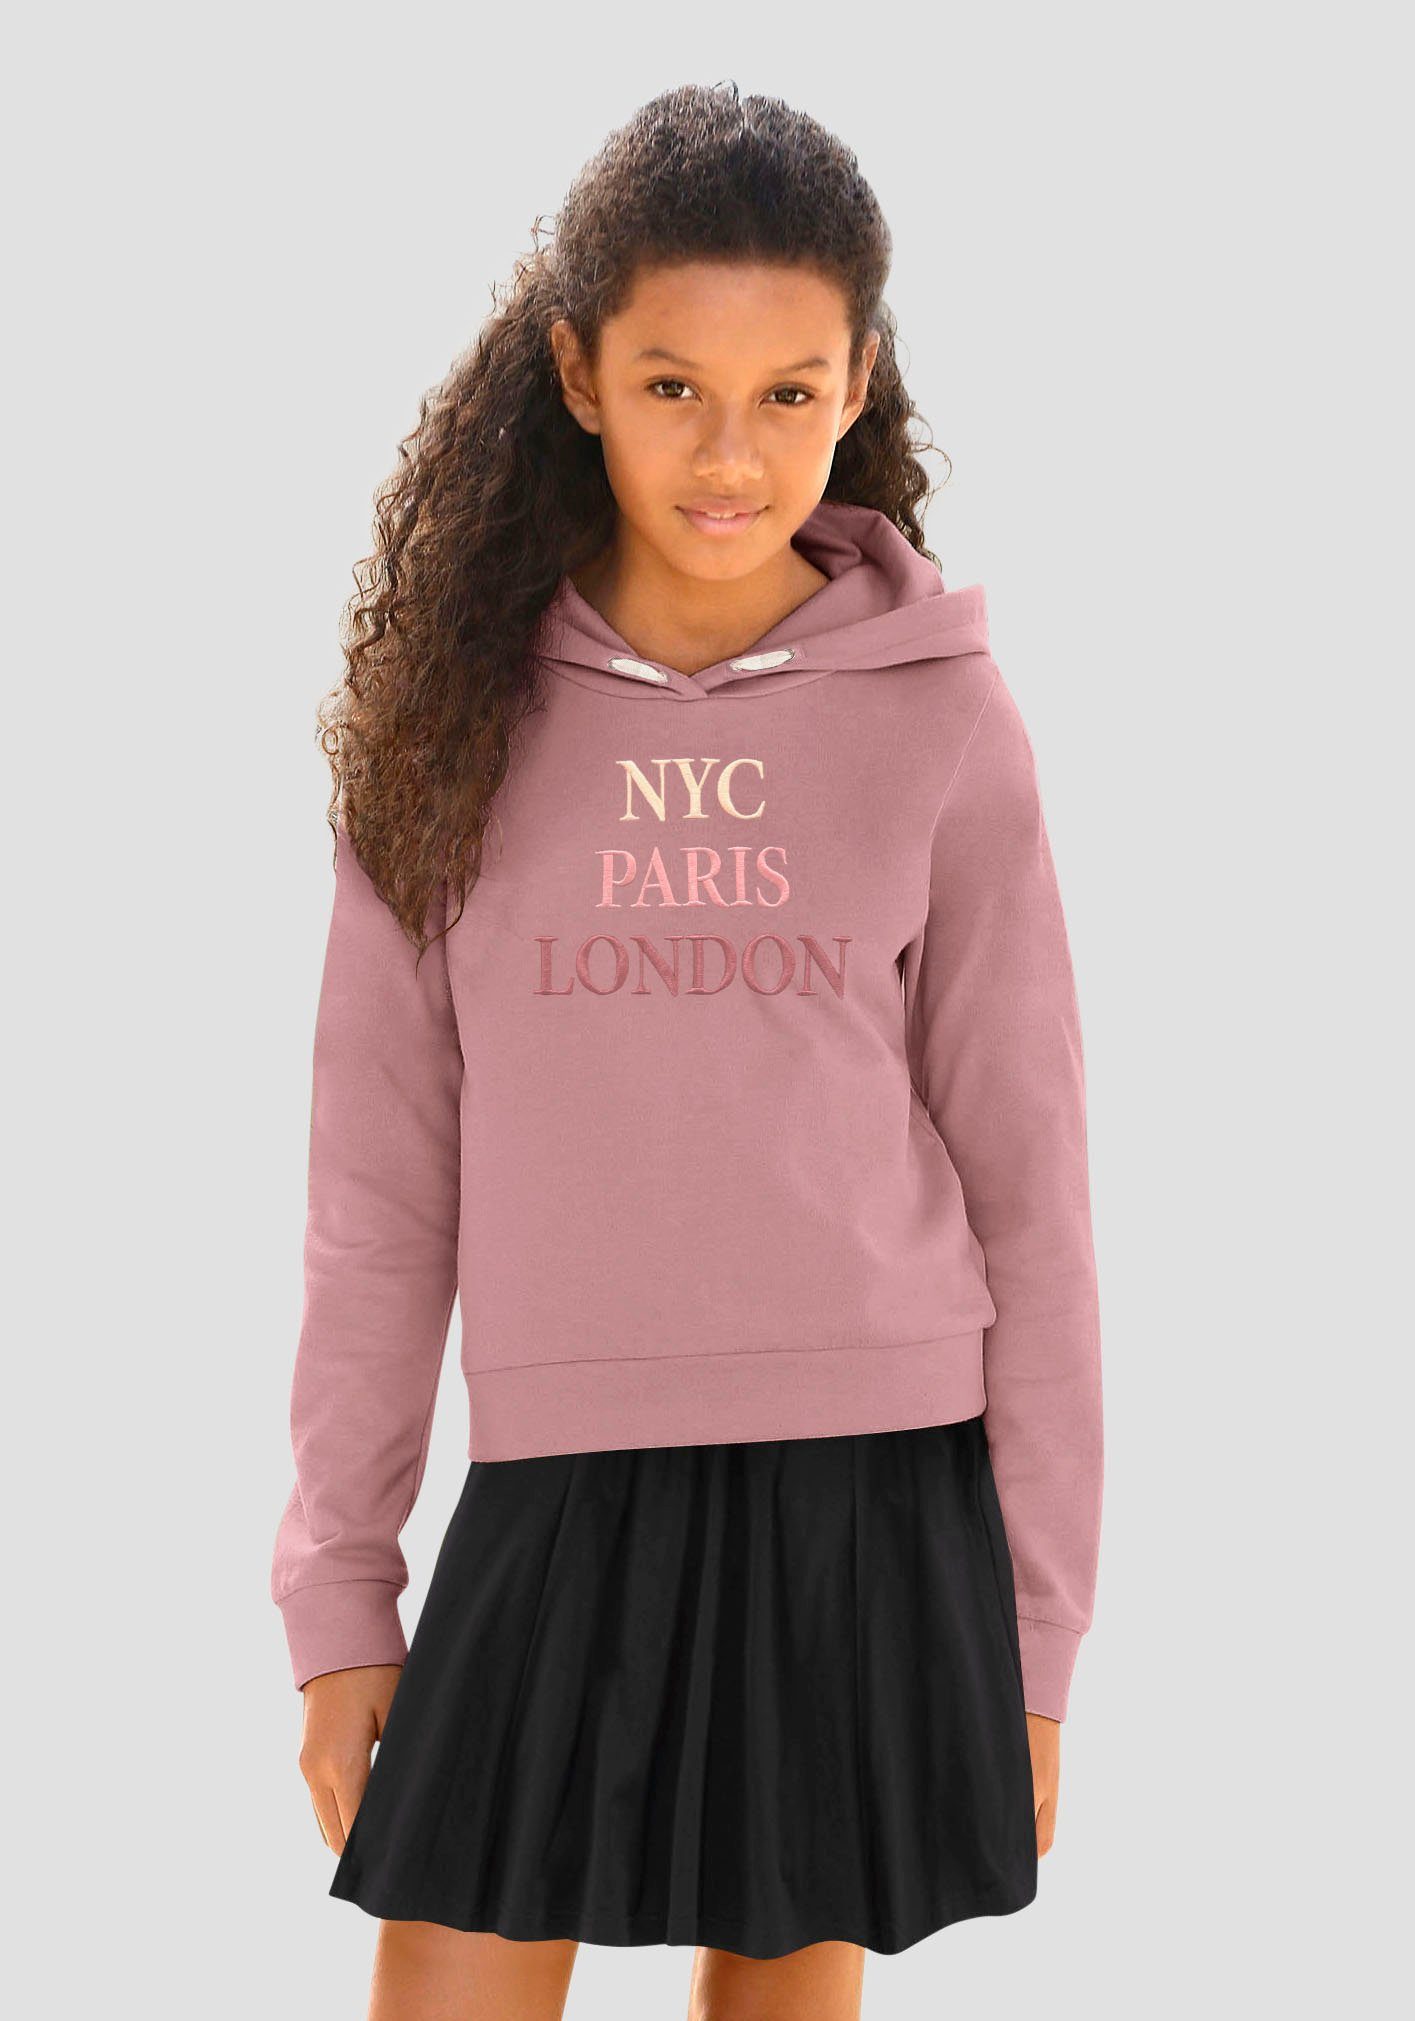 Paris Stickerei Kapuzensweatshirt NYC mit KIDSWORLD London